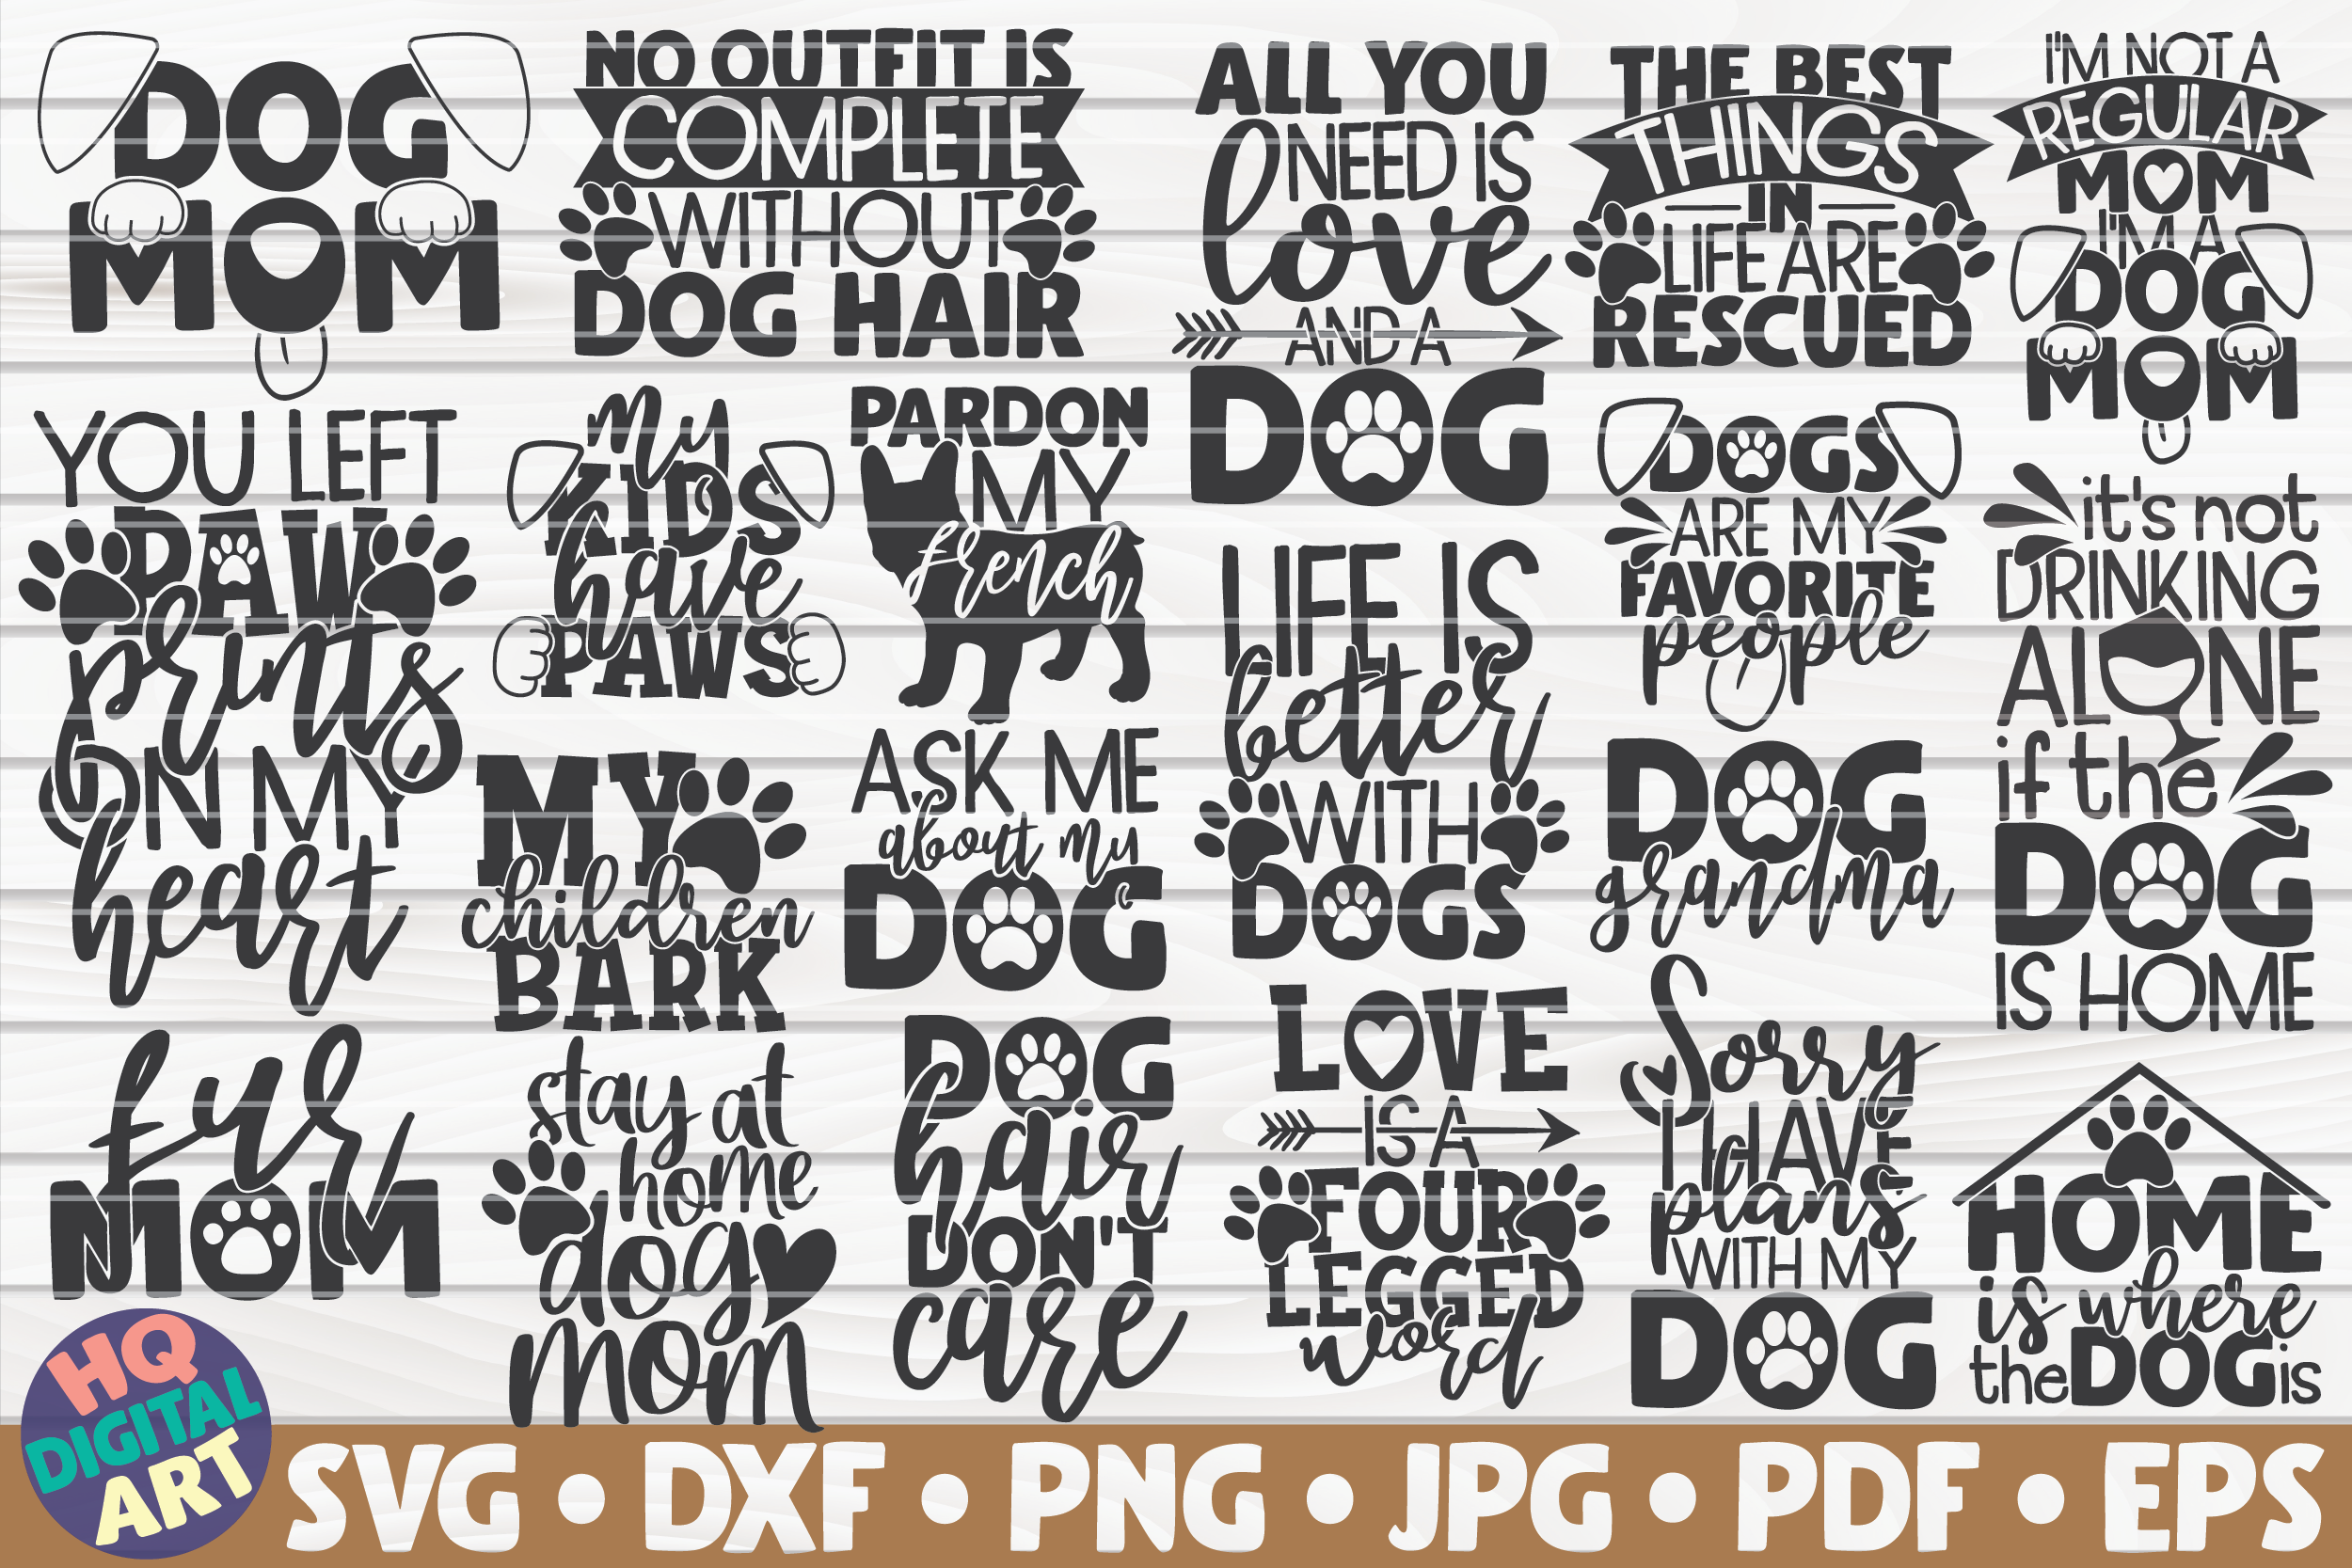 Download Dog Mom Quotes Svg Bundle By Hqdigitalart Thehungryjpeg Com SVG, PNG, EPS, DXF File